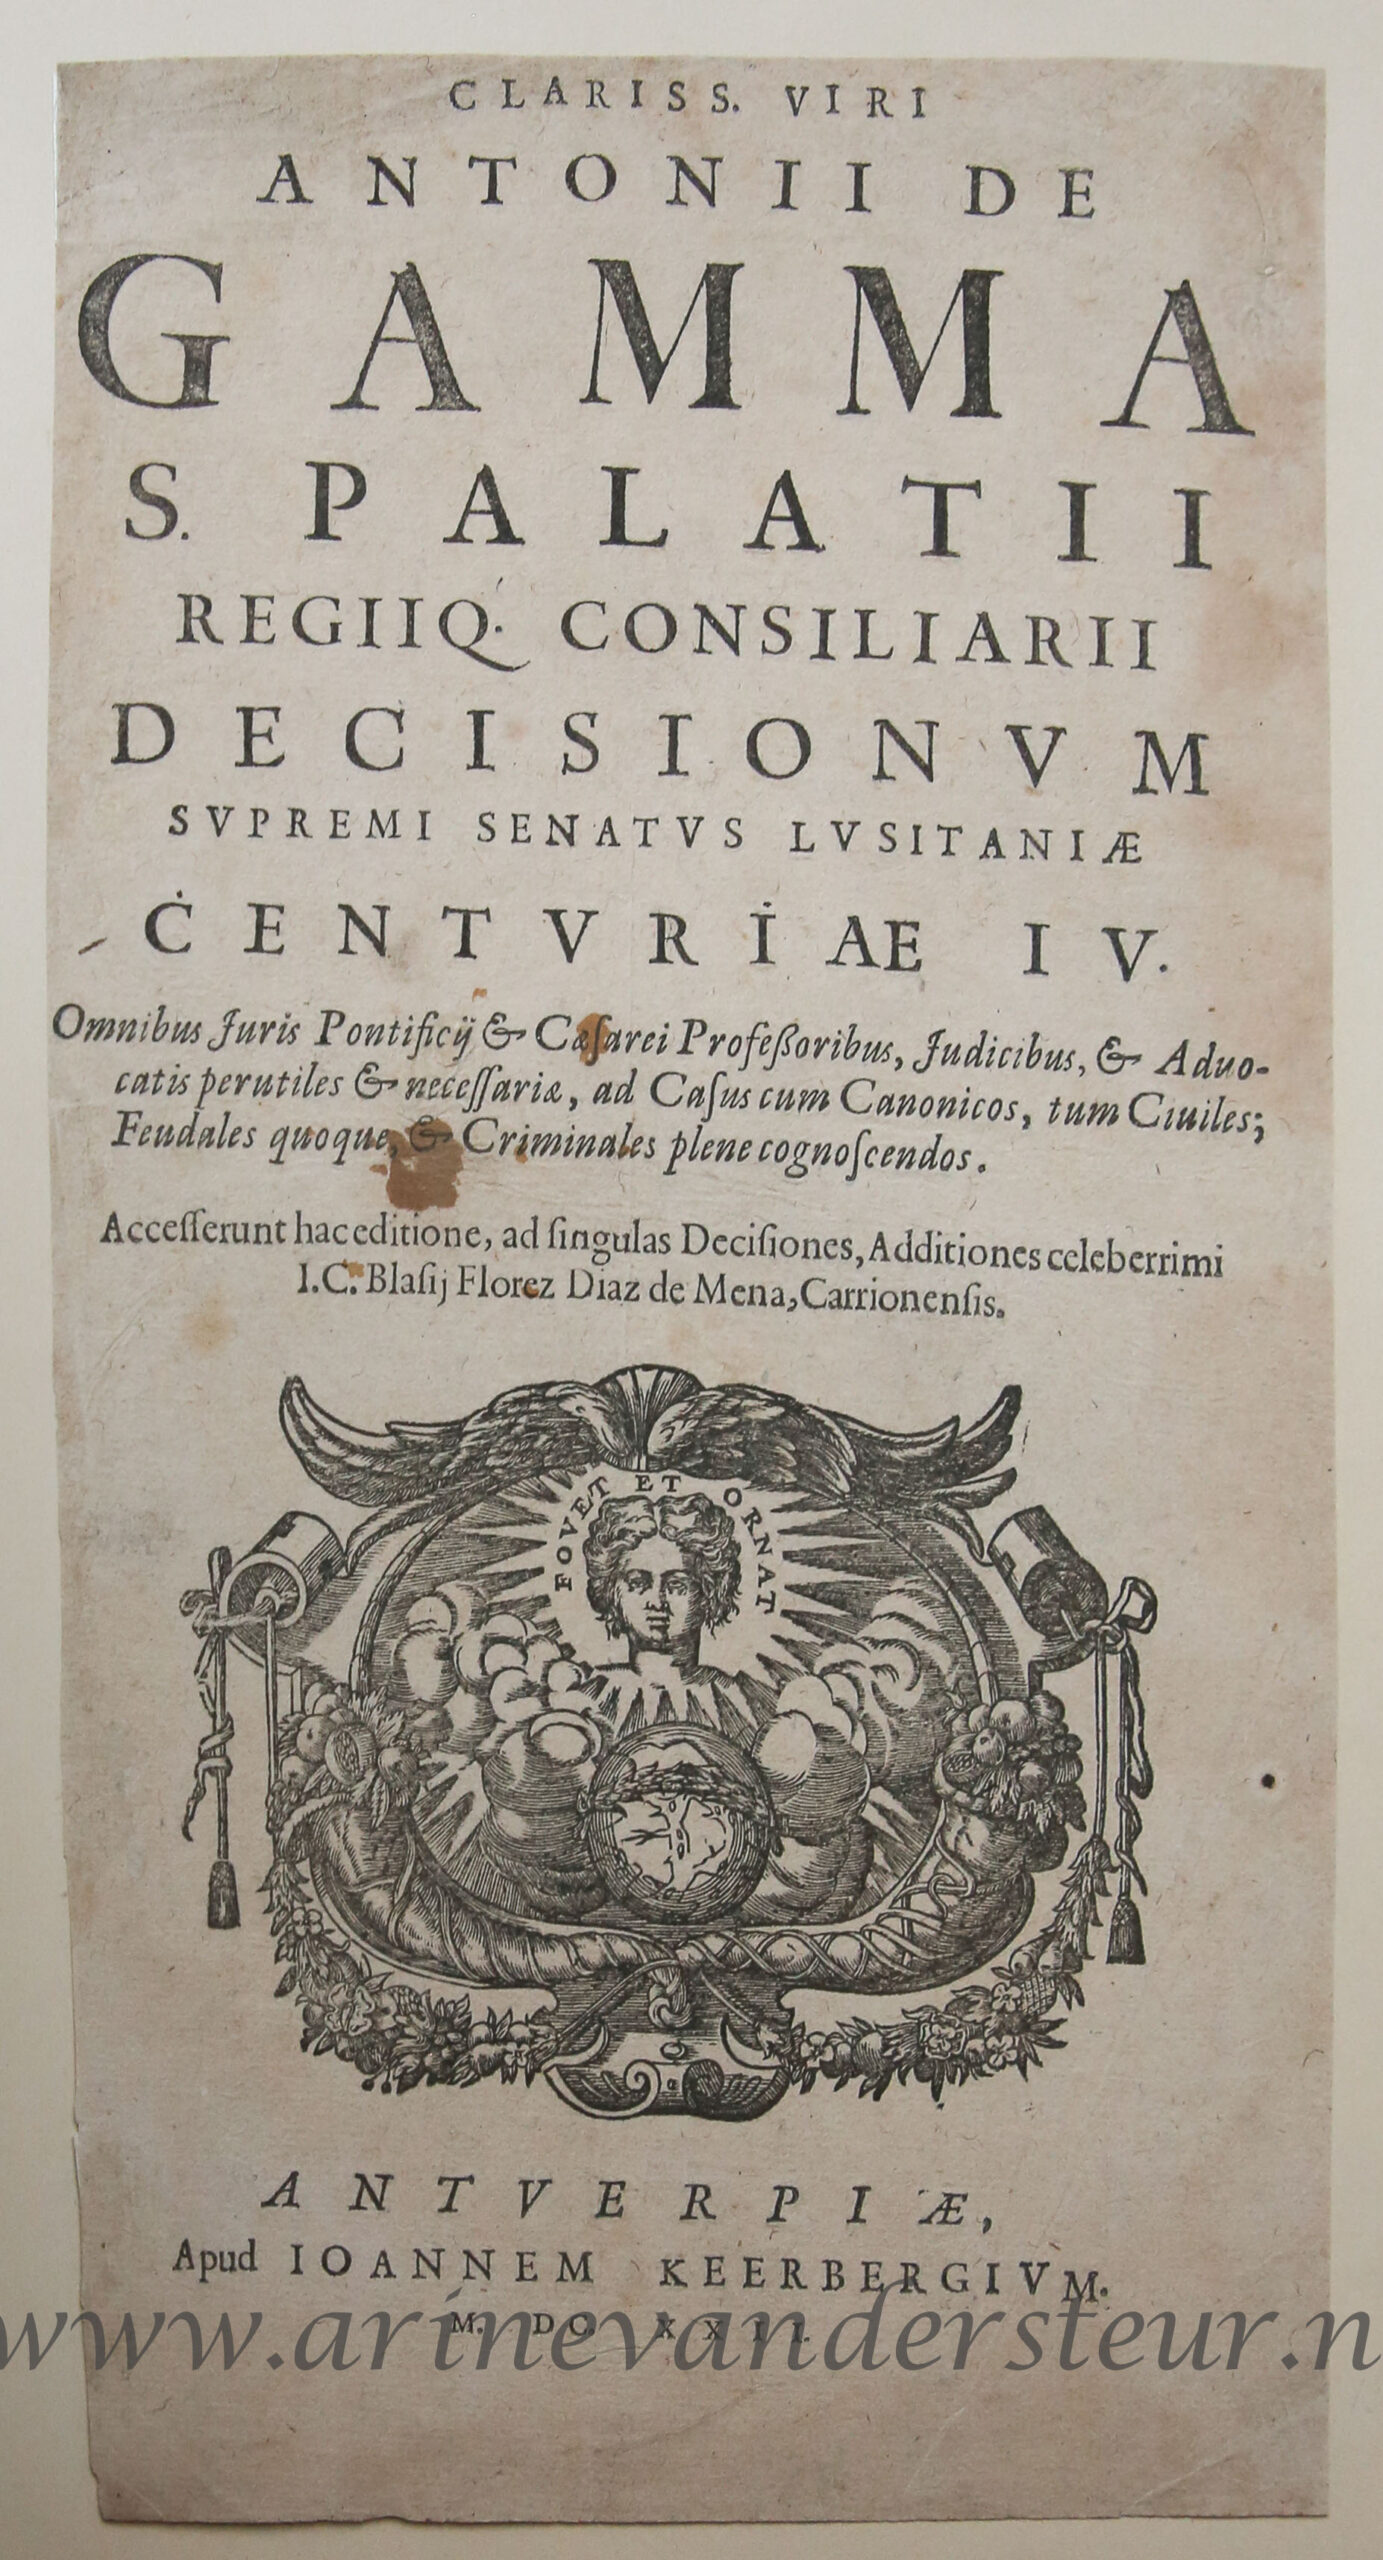 [Antique title page, 1622] CLARISS. VIRI ANTONII DE GAMMA, published 1622, 1 p.